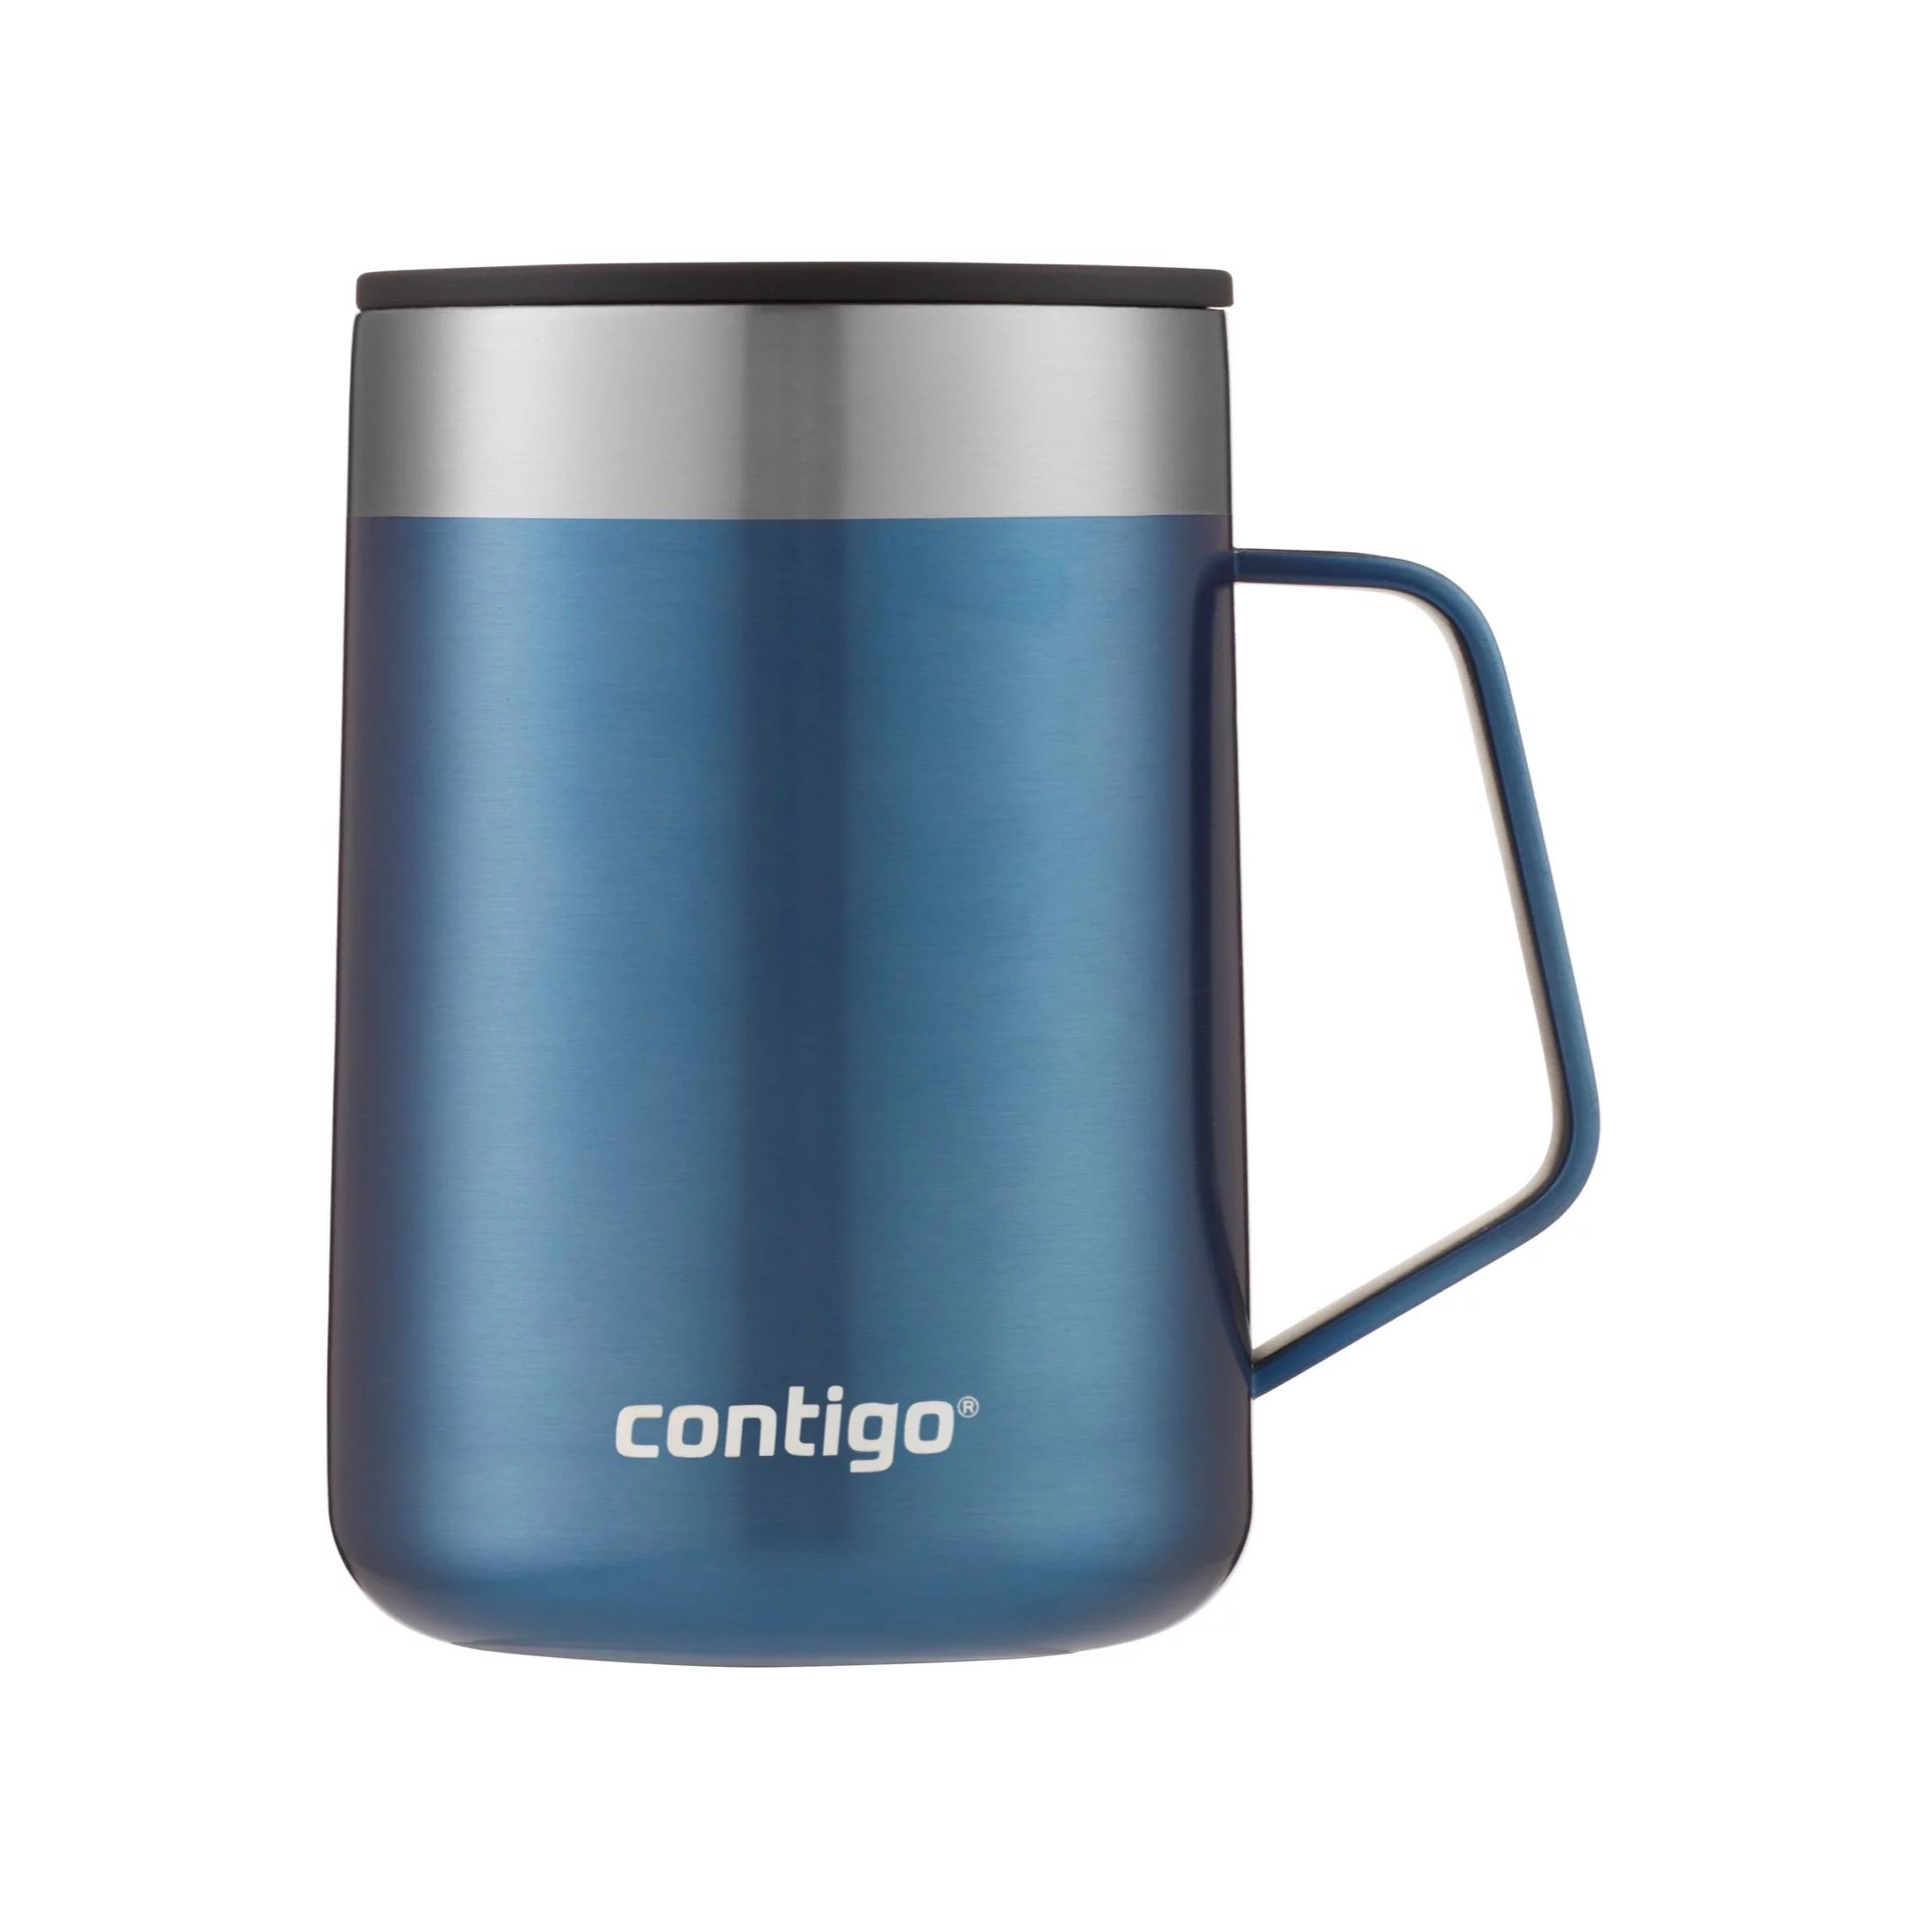 Contigo Streeterville Stainless Steel Mug with Splash-Proof Lid and Handle in Blue, 14 fl oz. | Walmart (US)